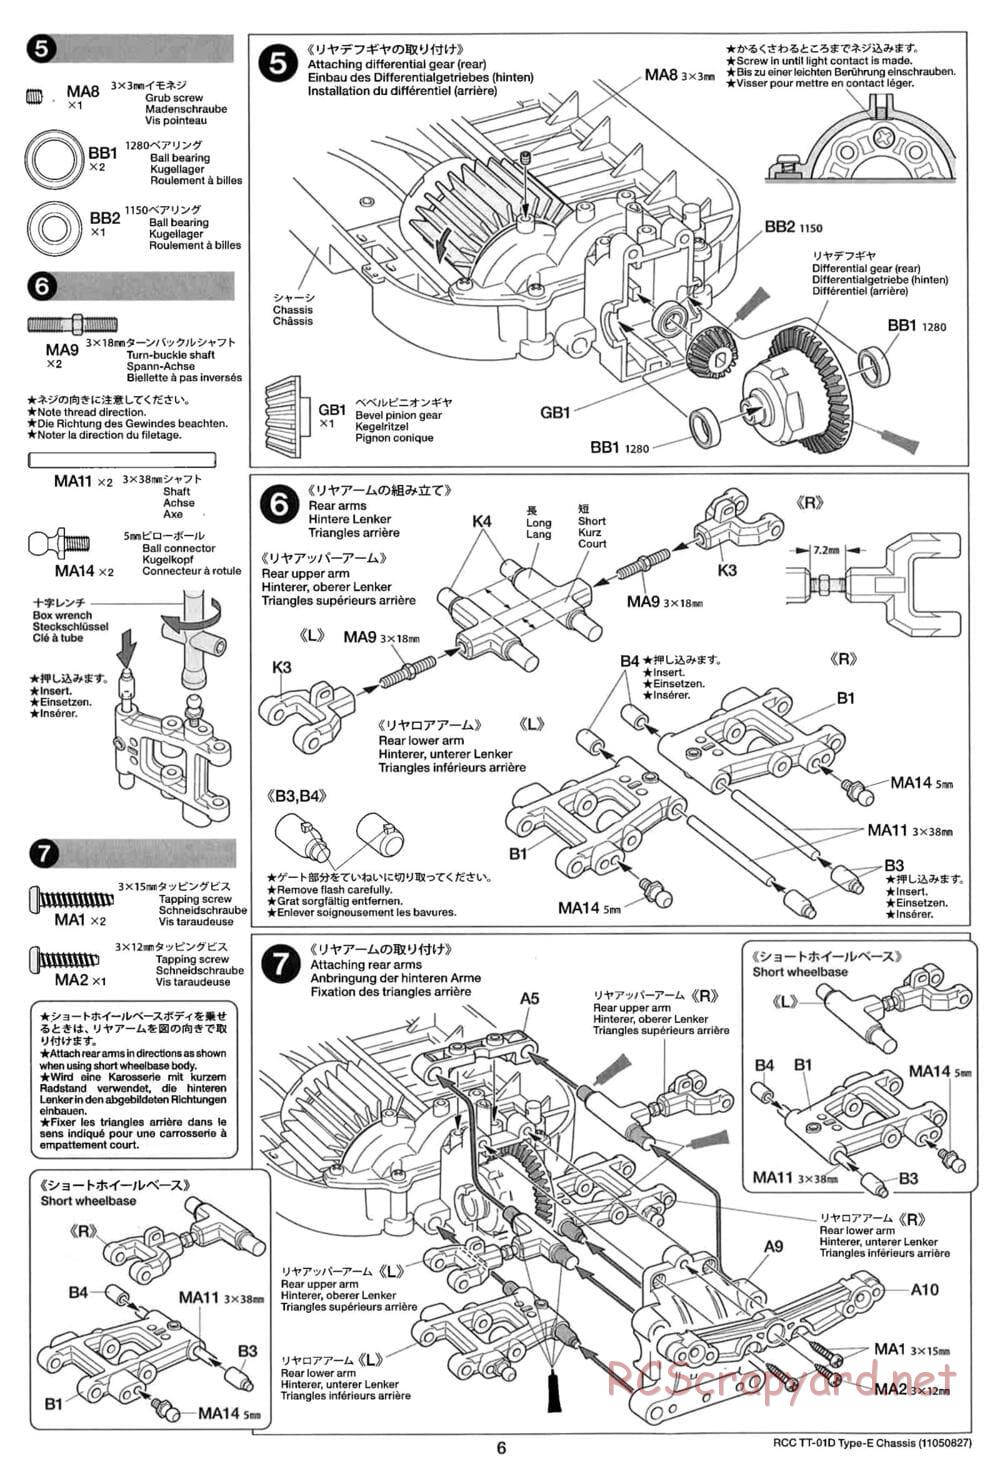 Tamiya - TT-01D Type-E (TT-01ED) - Drift Spec Chassis - Manual - Page 6